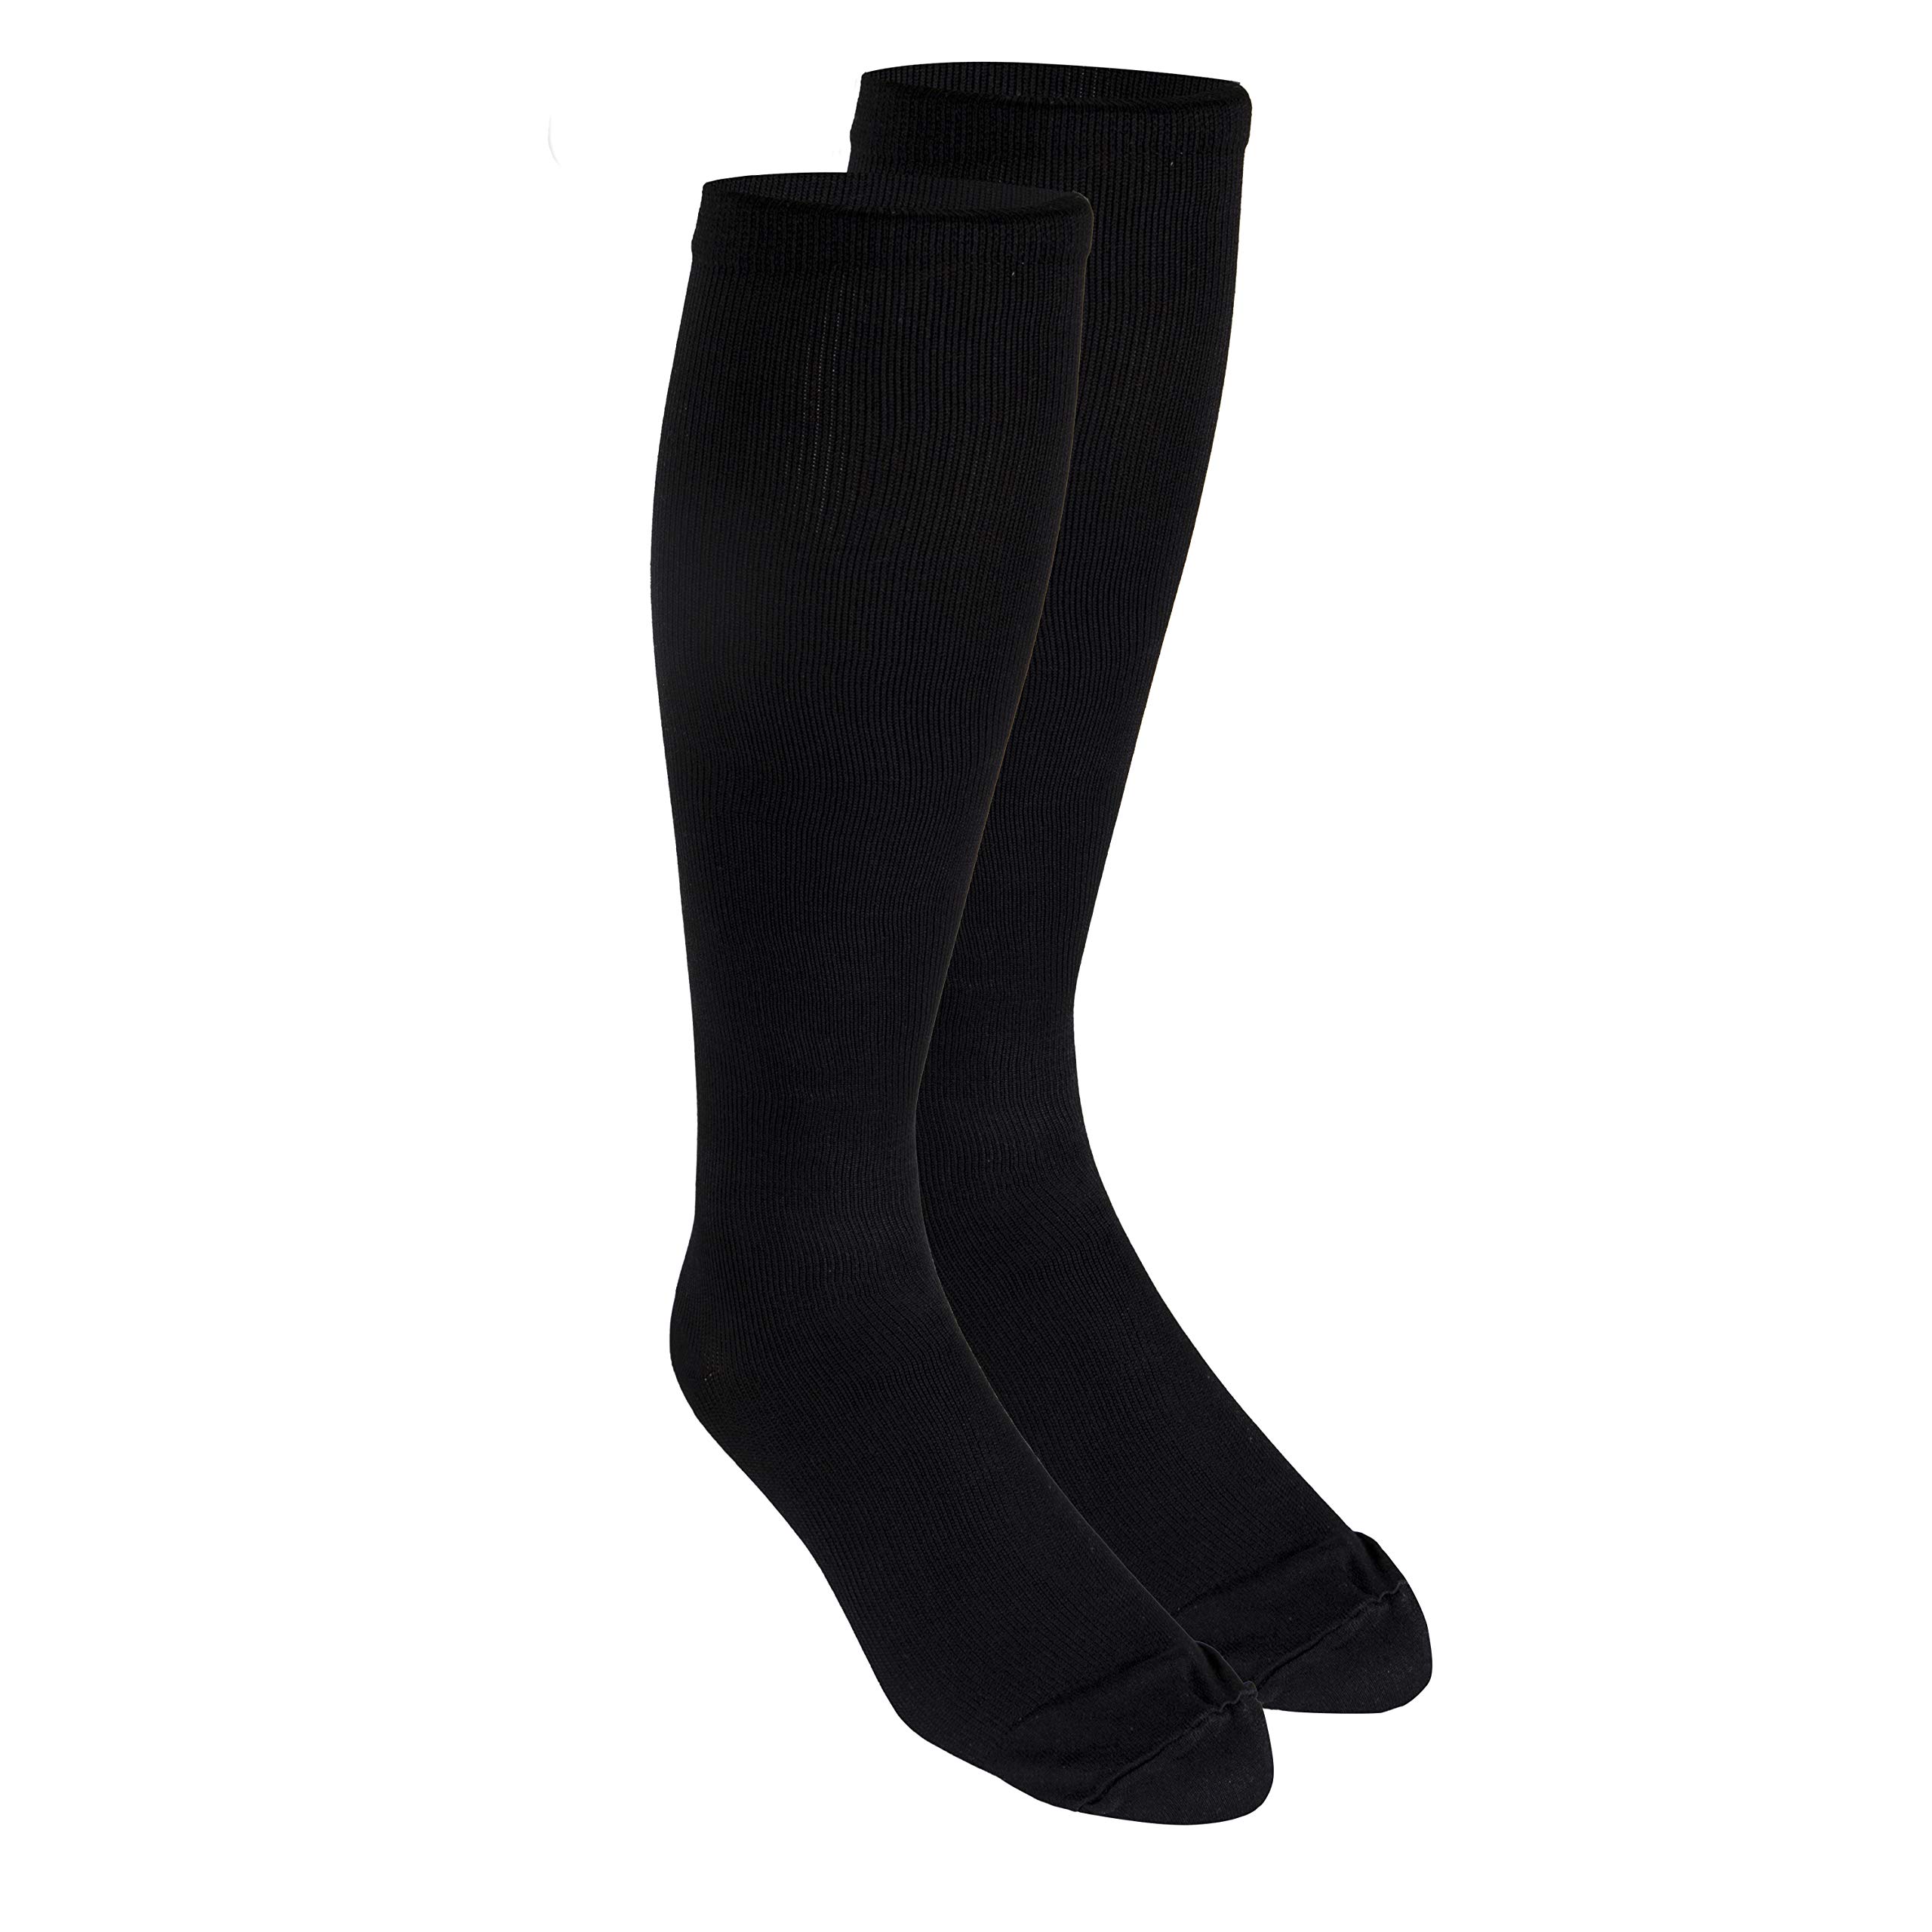 Truform Compression Socks, 20-30 mmHg, Men's Dress Socks, Knee High Over Calf Length, Black, X-Large, 1944BL-XL